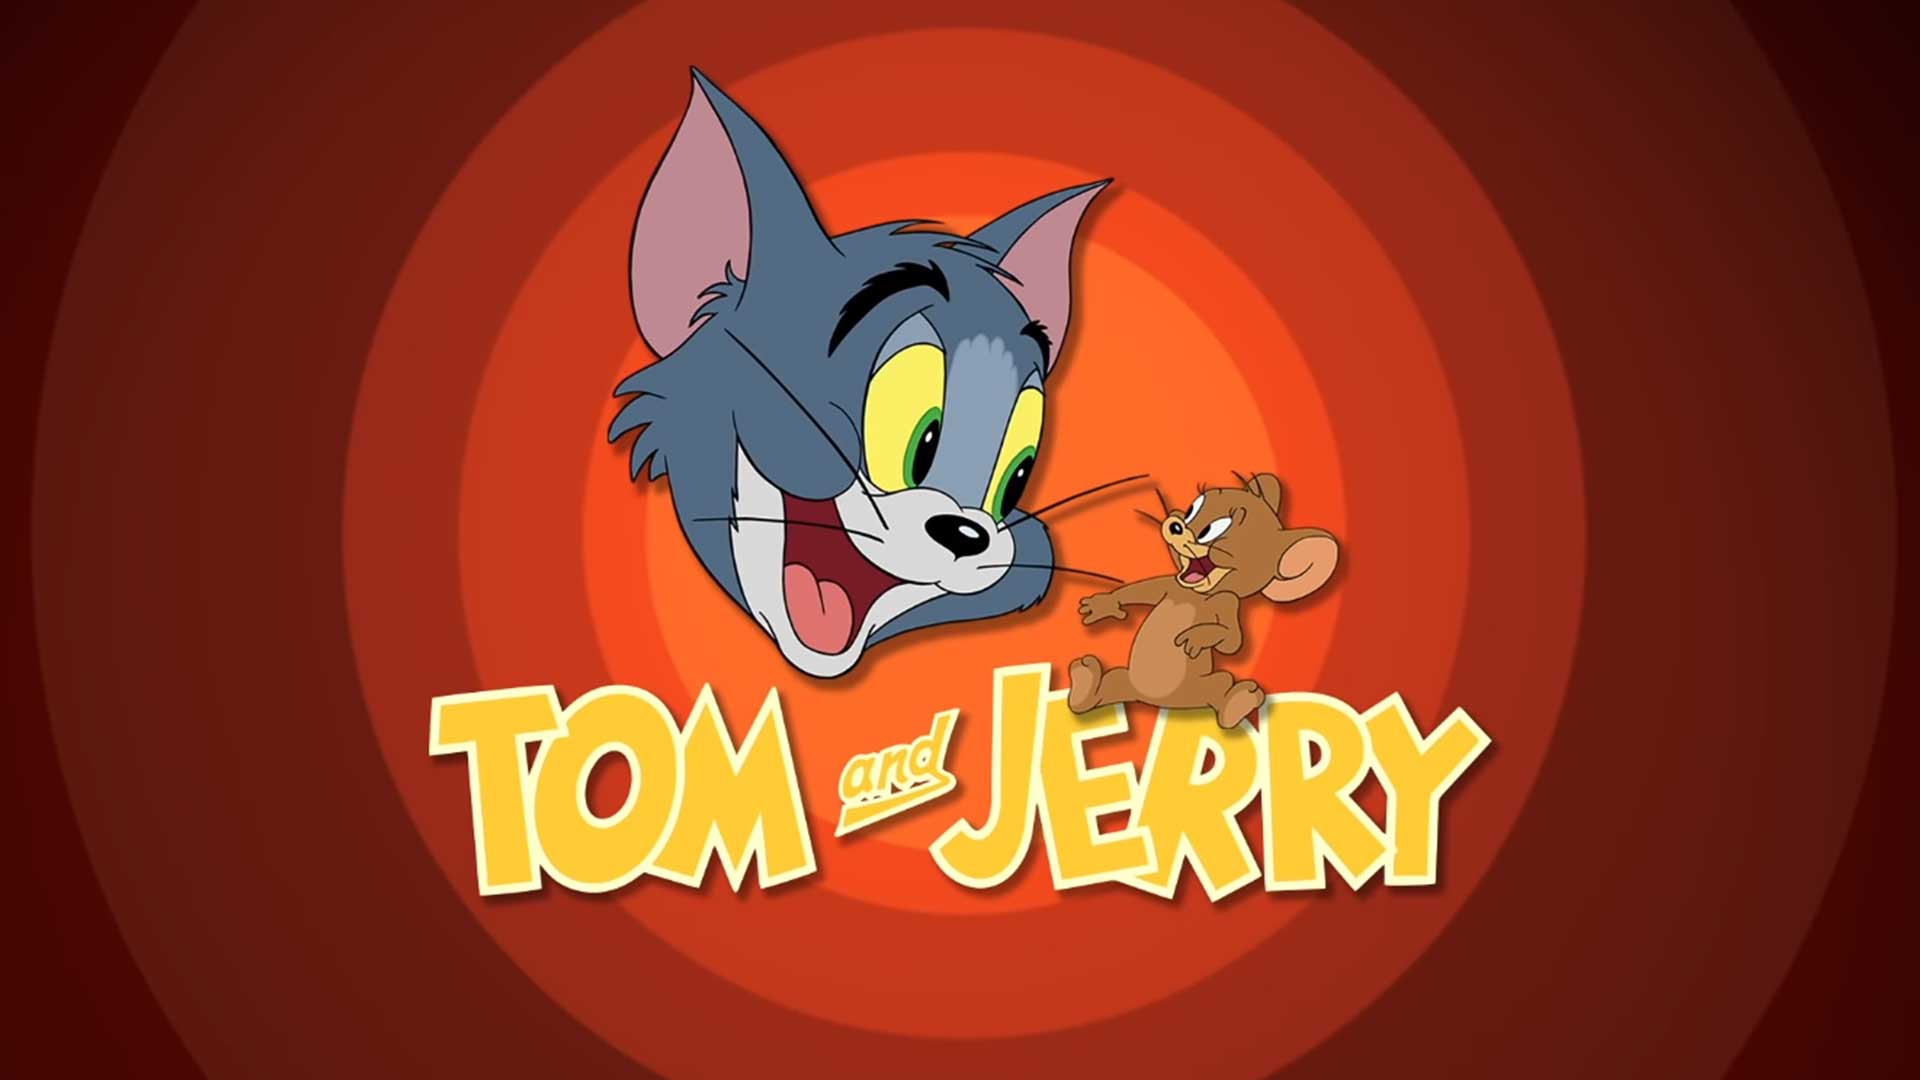 Том и Джерри – 54 серия «Кот-бильярдист» / Tom and Jerry